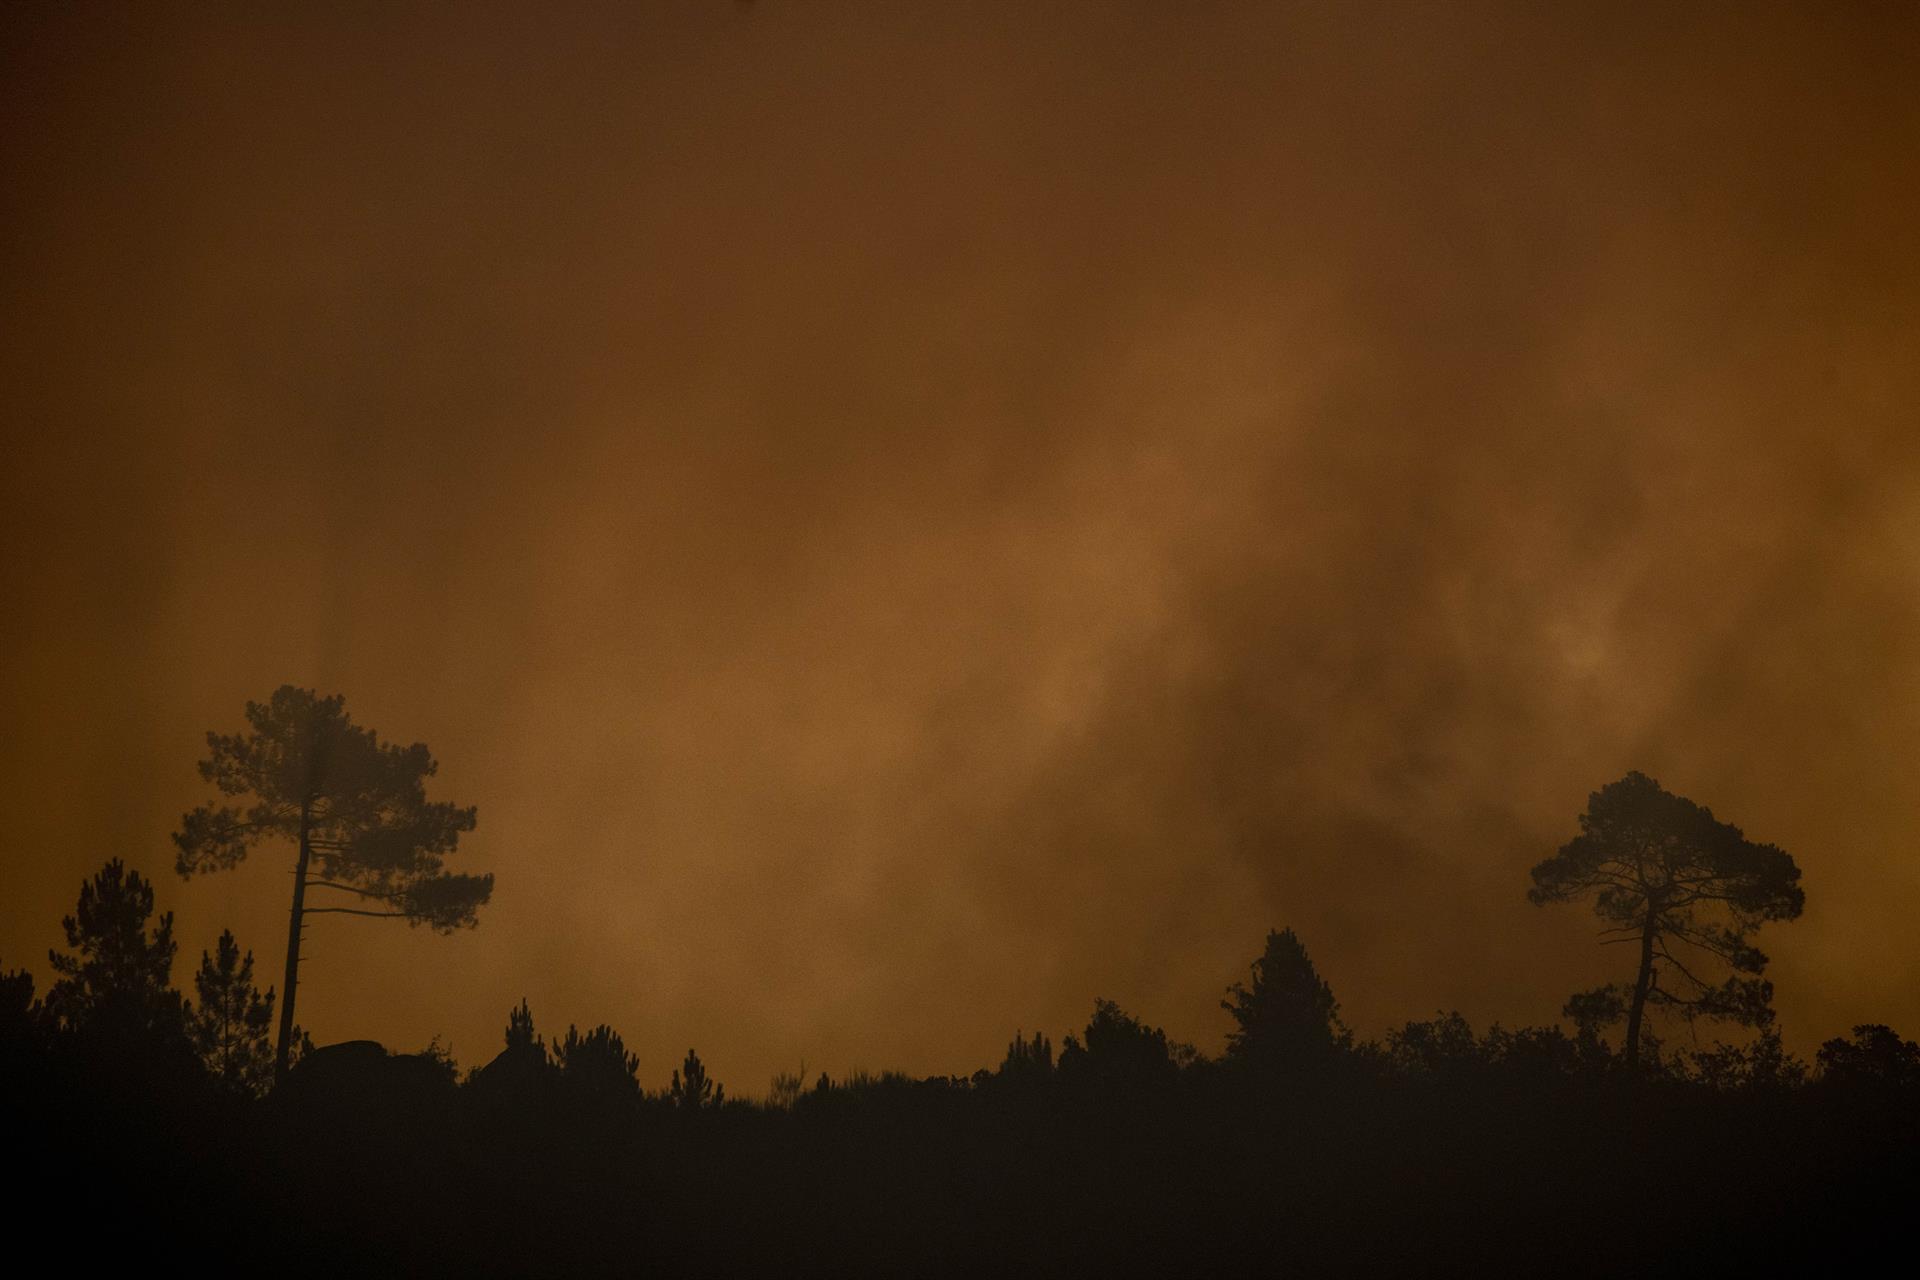 Vista del incendio en Cenlle, parroquia de A Pena, ayer. EFE/Brais Lorenzo